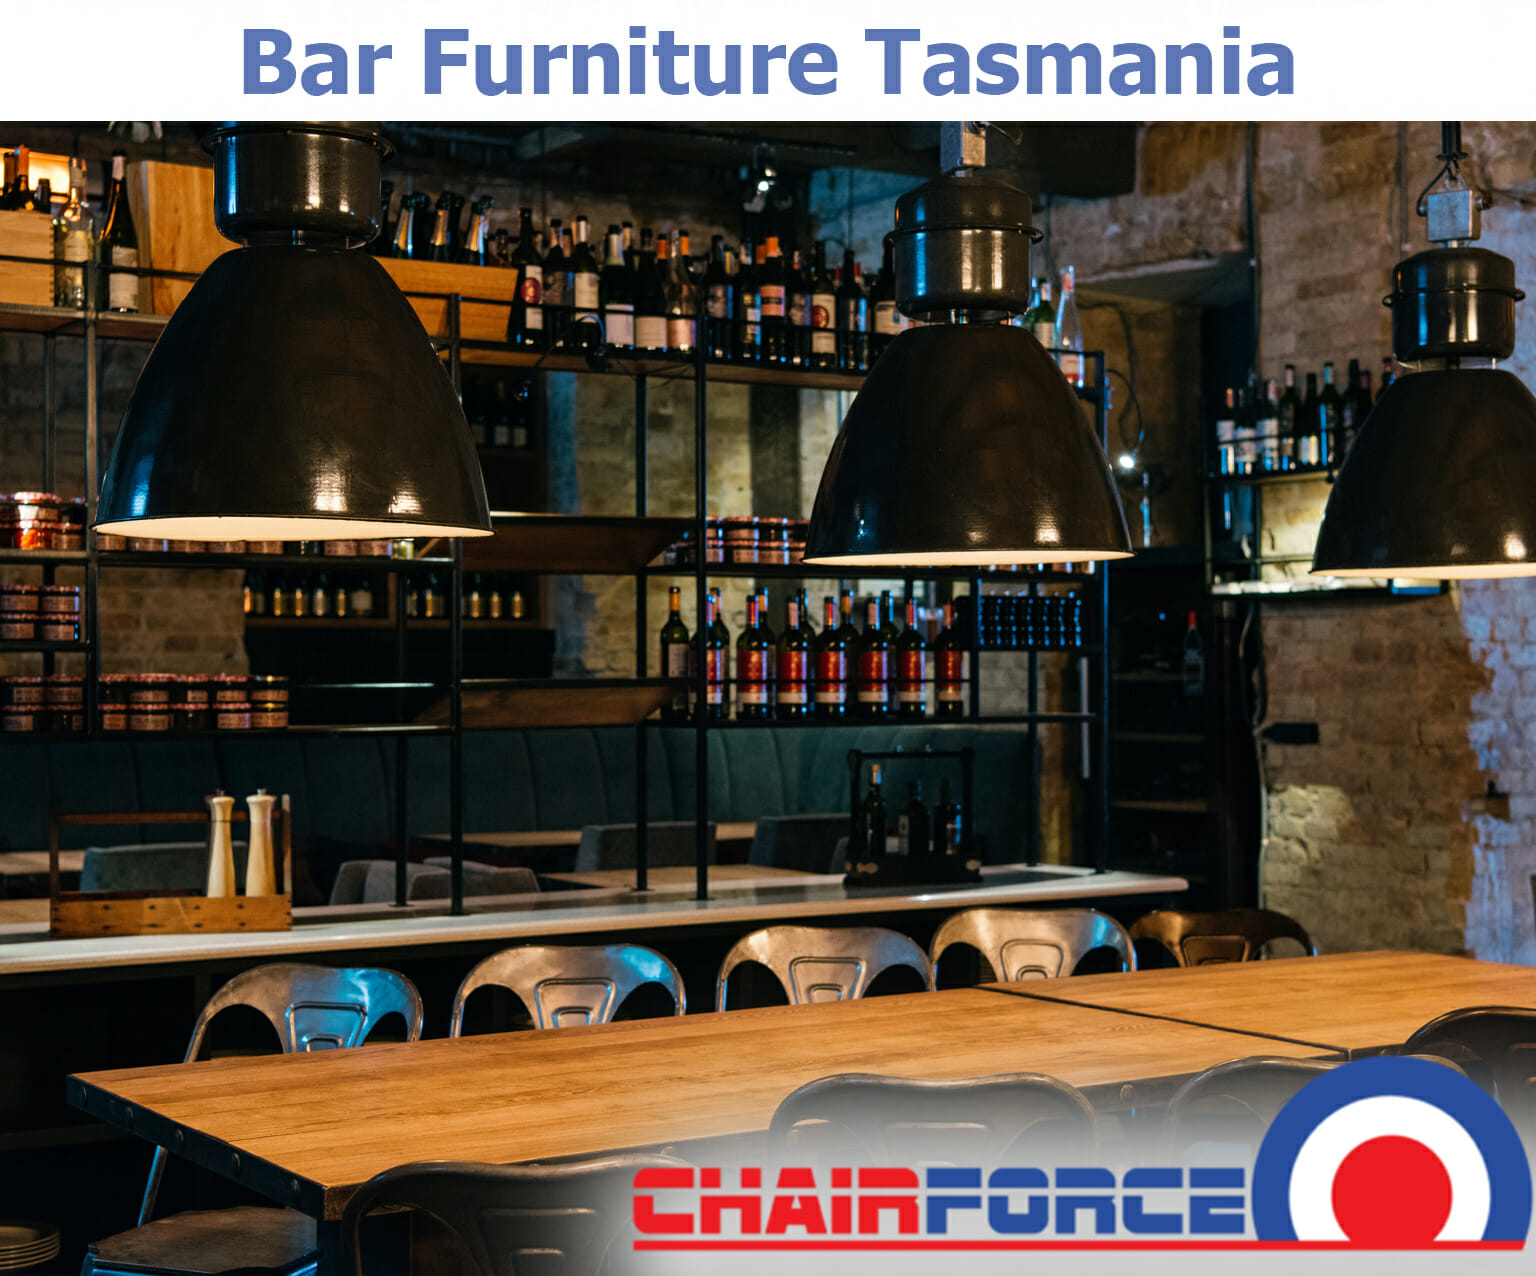 bar furnitures in Tasmania